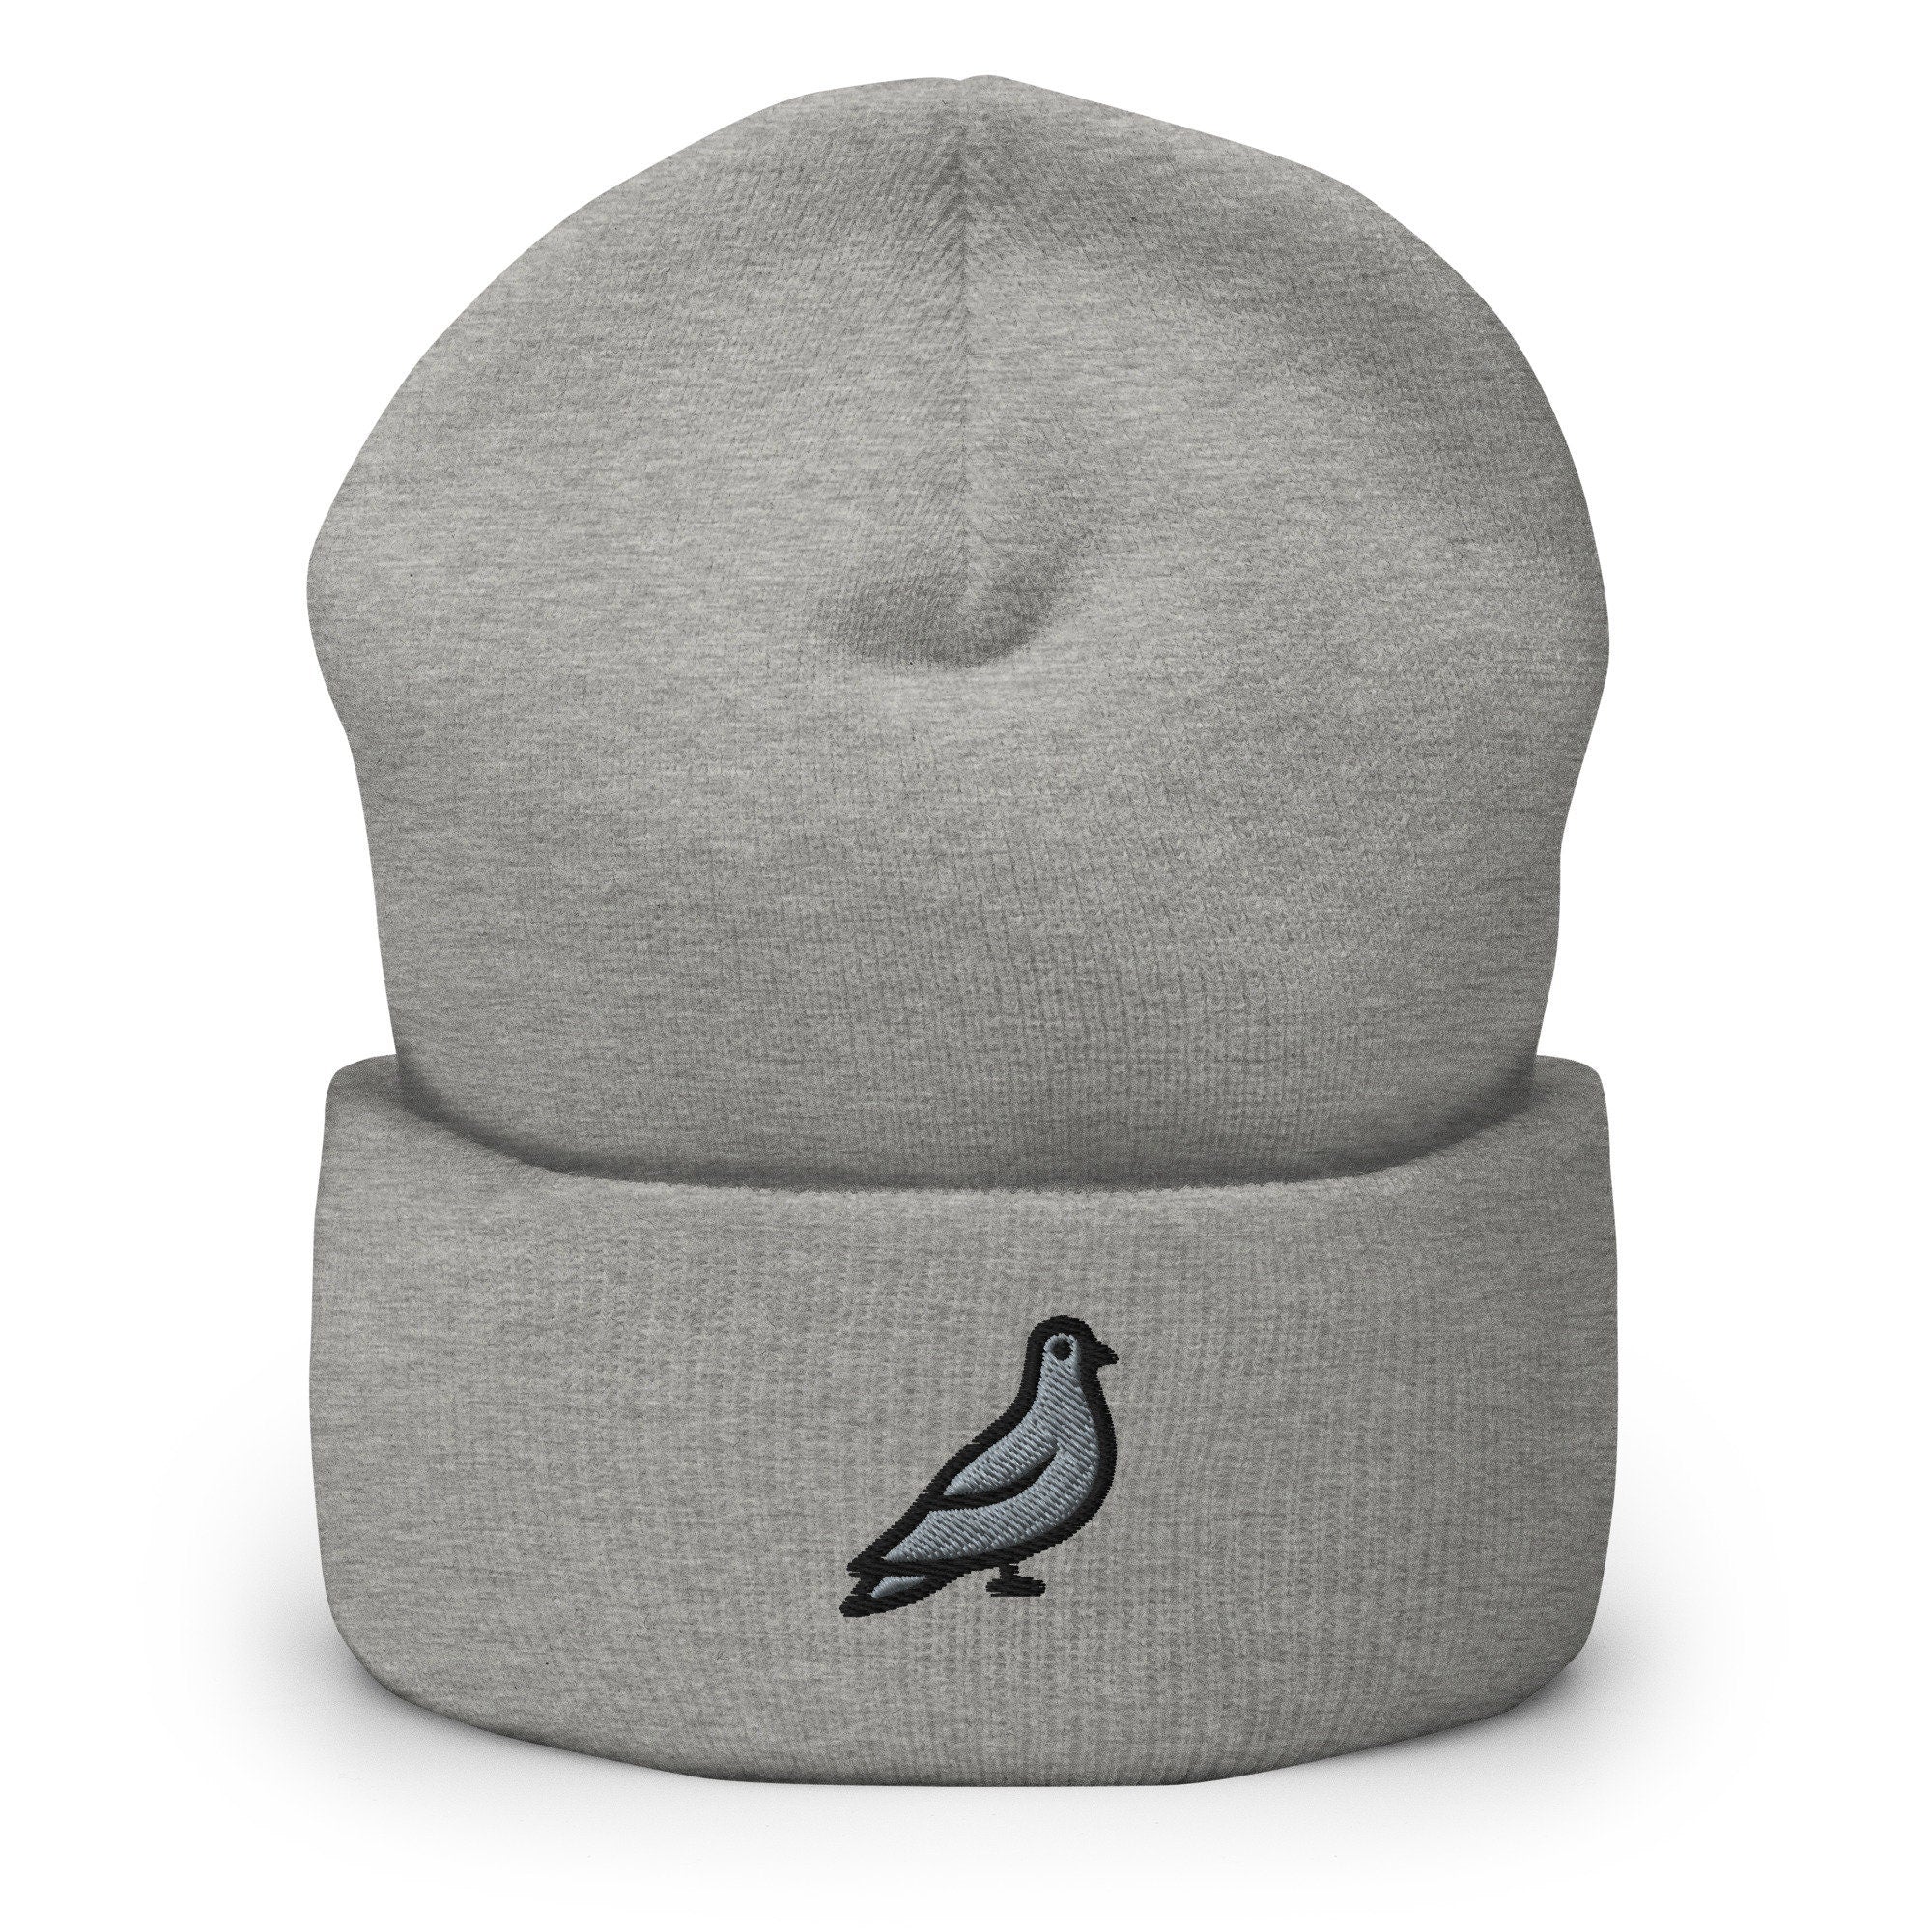 Pigeon Bird Embroidered Beanie, Handmade Cuffed Knit Unisex Slouchy Adult Winter Hat Cap Gift